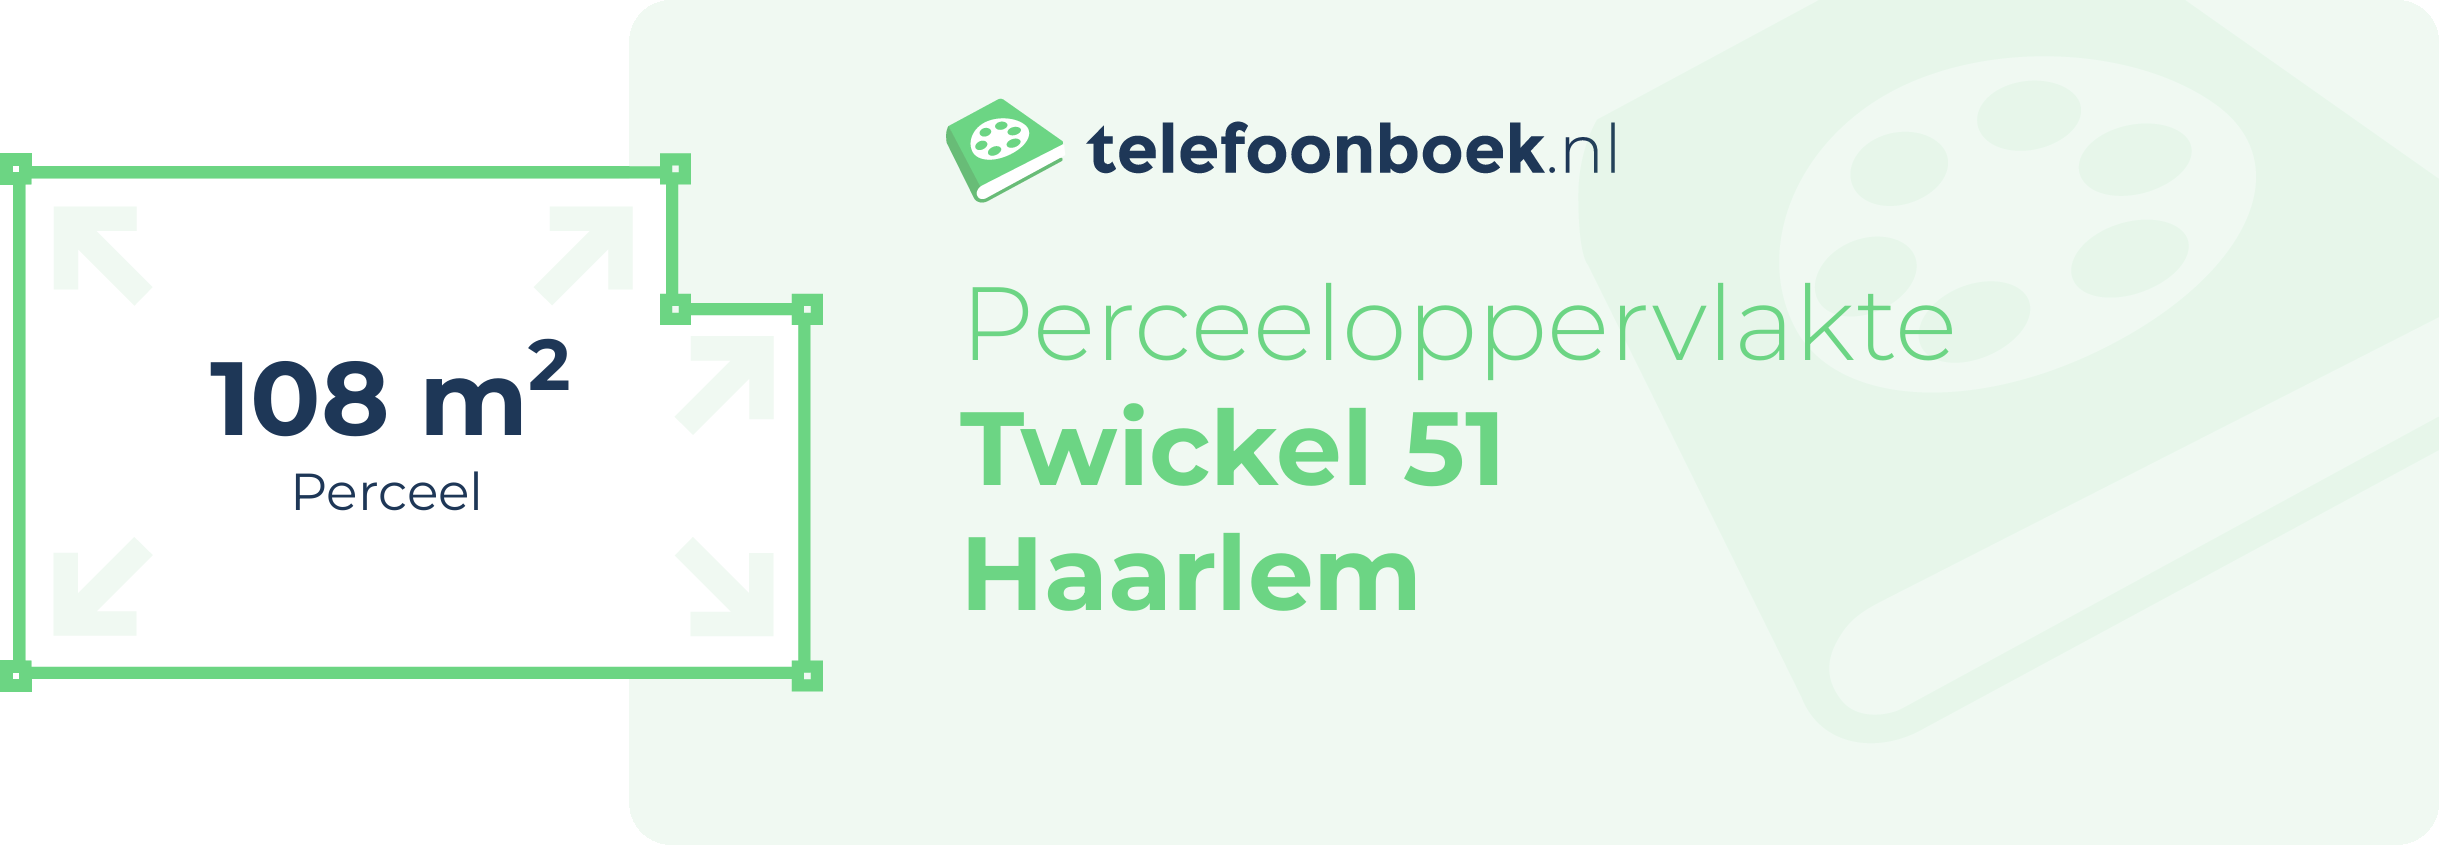 Perceeloppervlakte Twickel 51 Haarlem